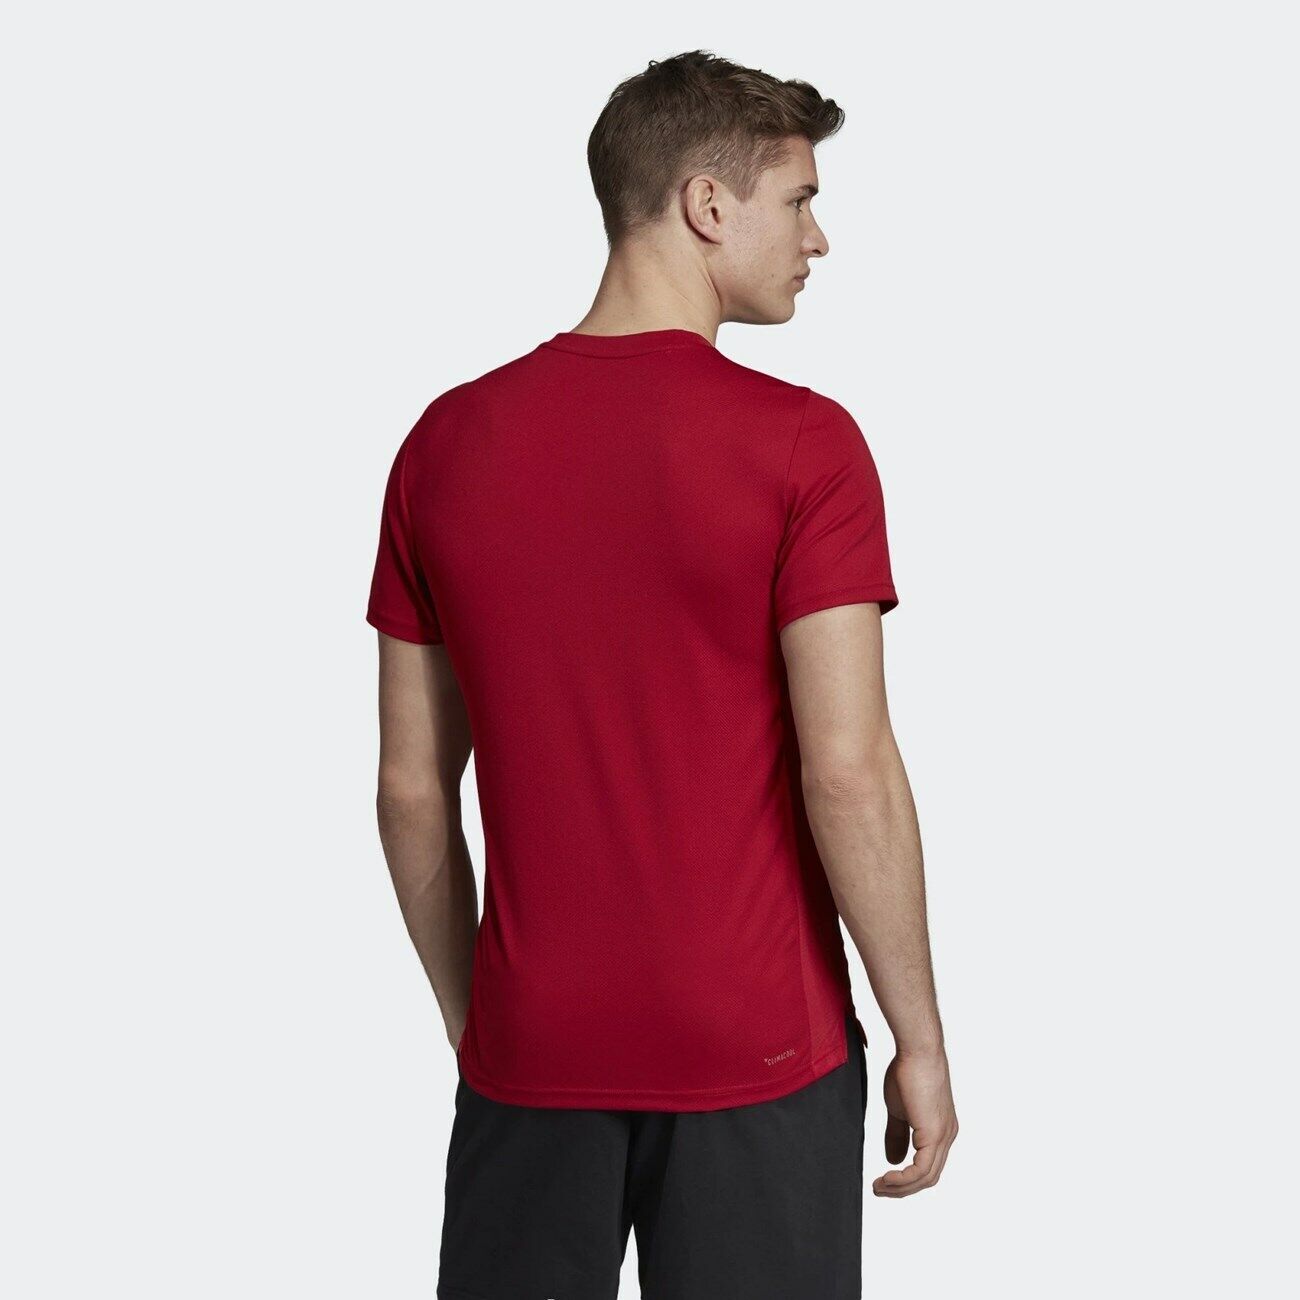 Adidas Brilliant Basics T-shirt Burgundy Sports Fitness